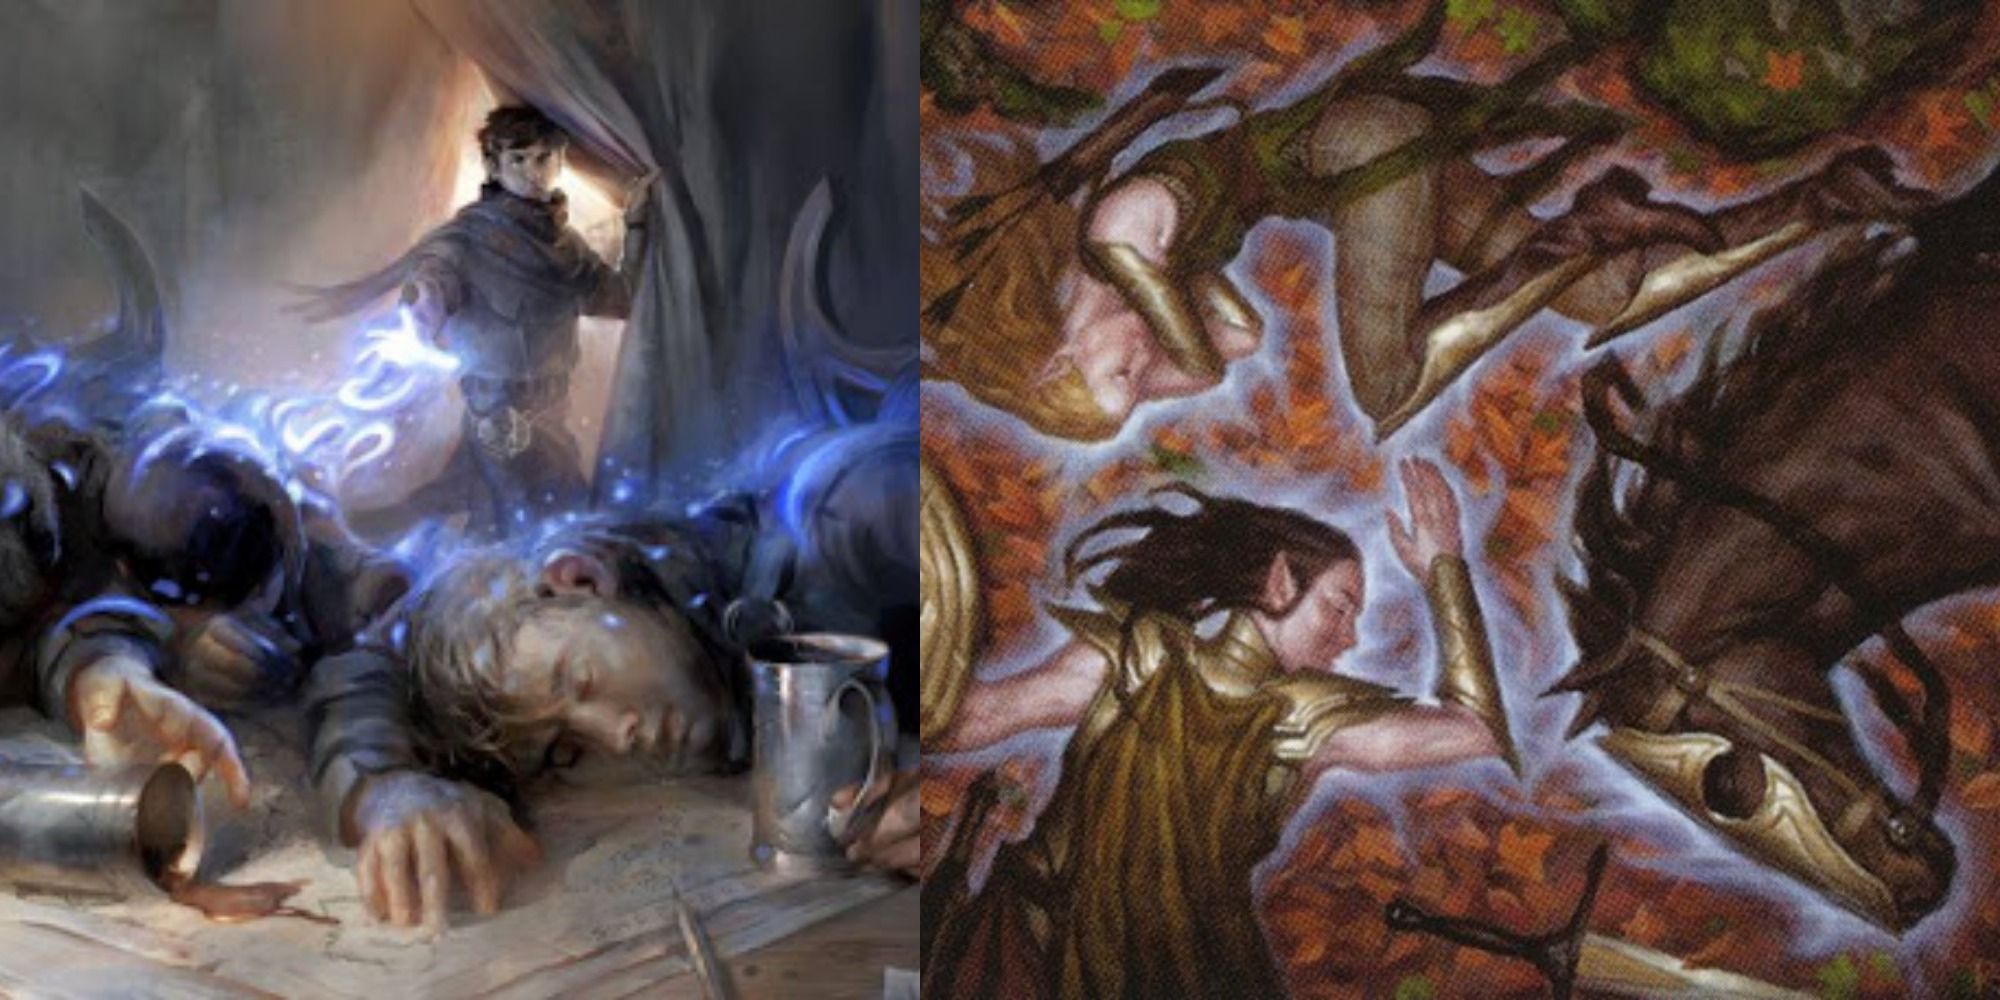 Sorcerer Spells Sleep on taven members